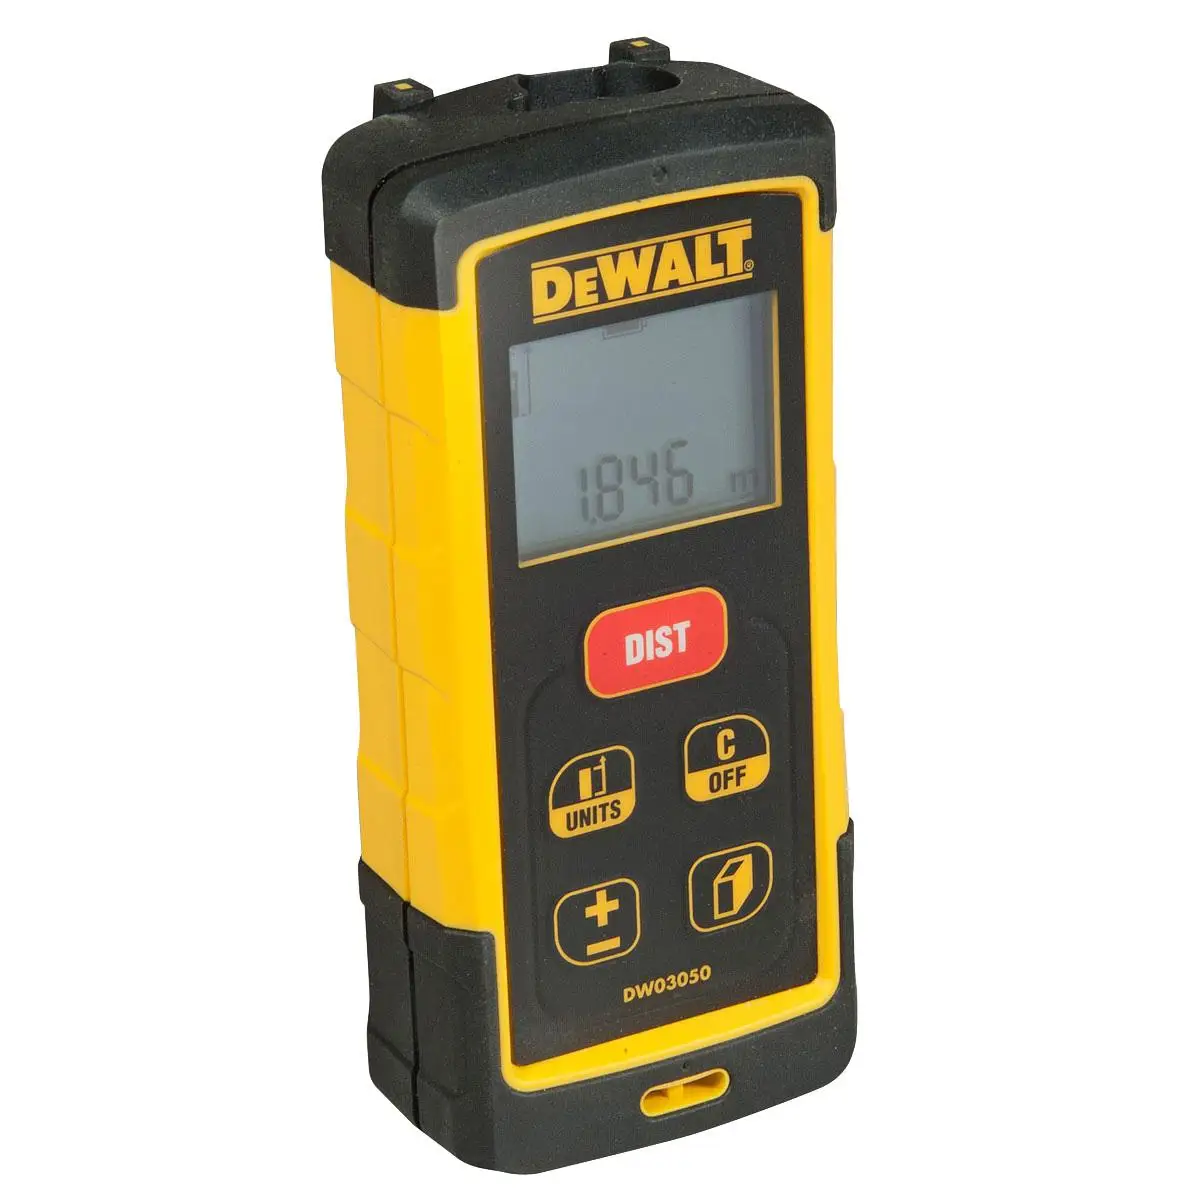 dewalt-dw03050-laser-measuring-tool